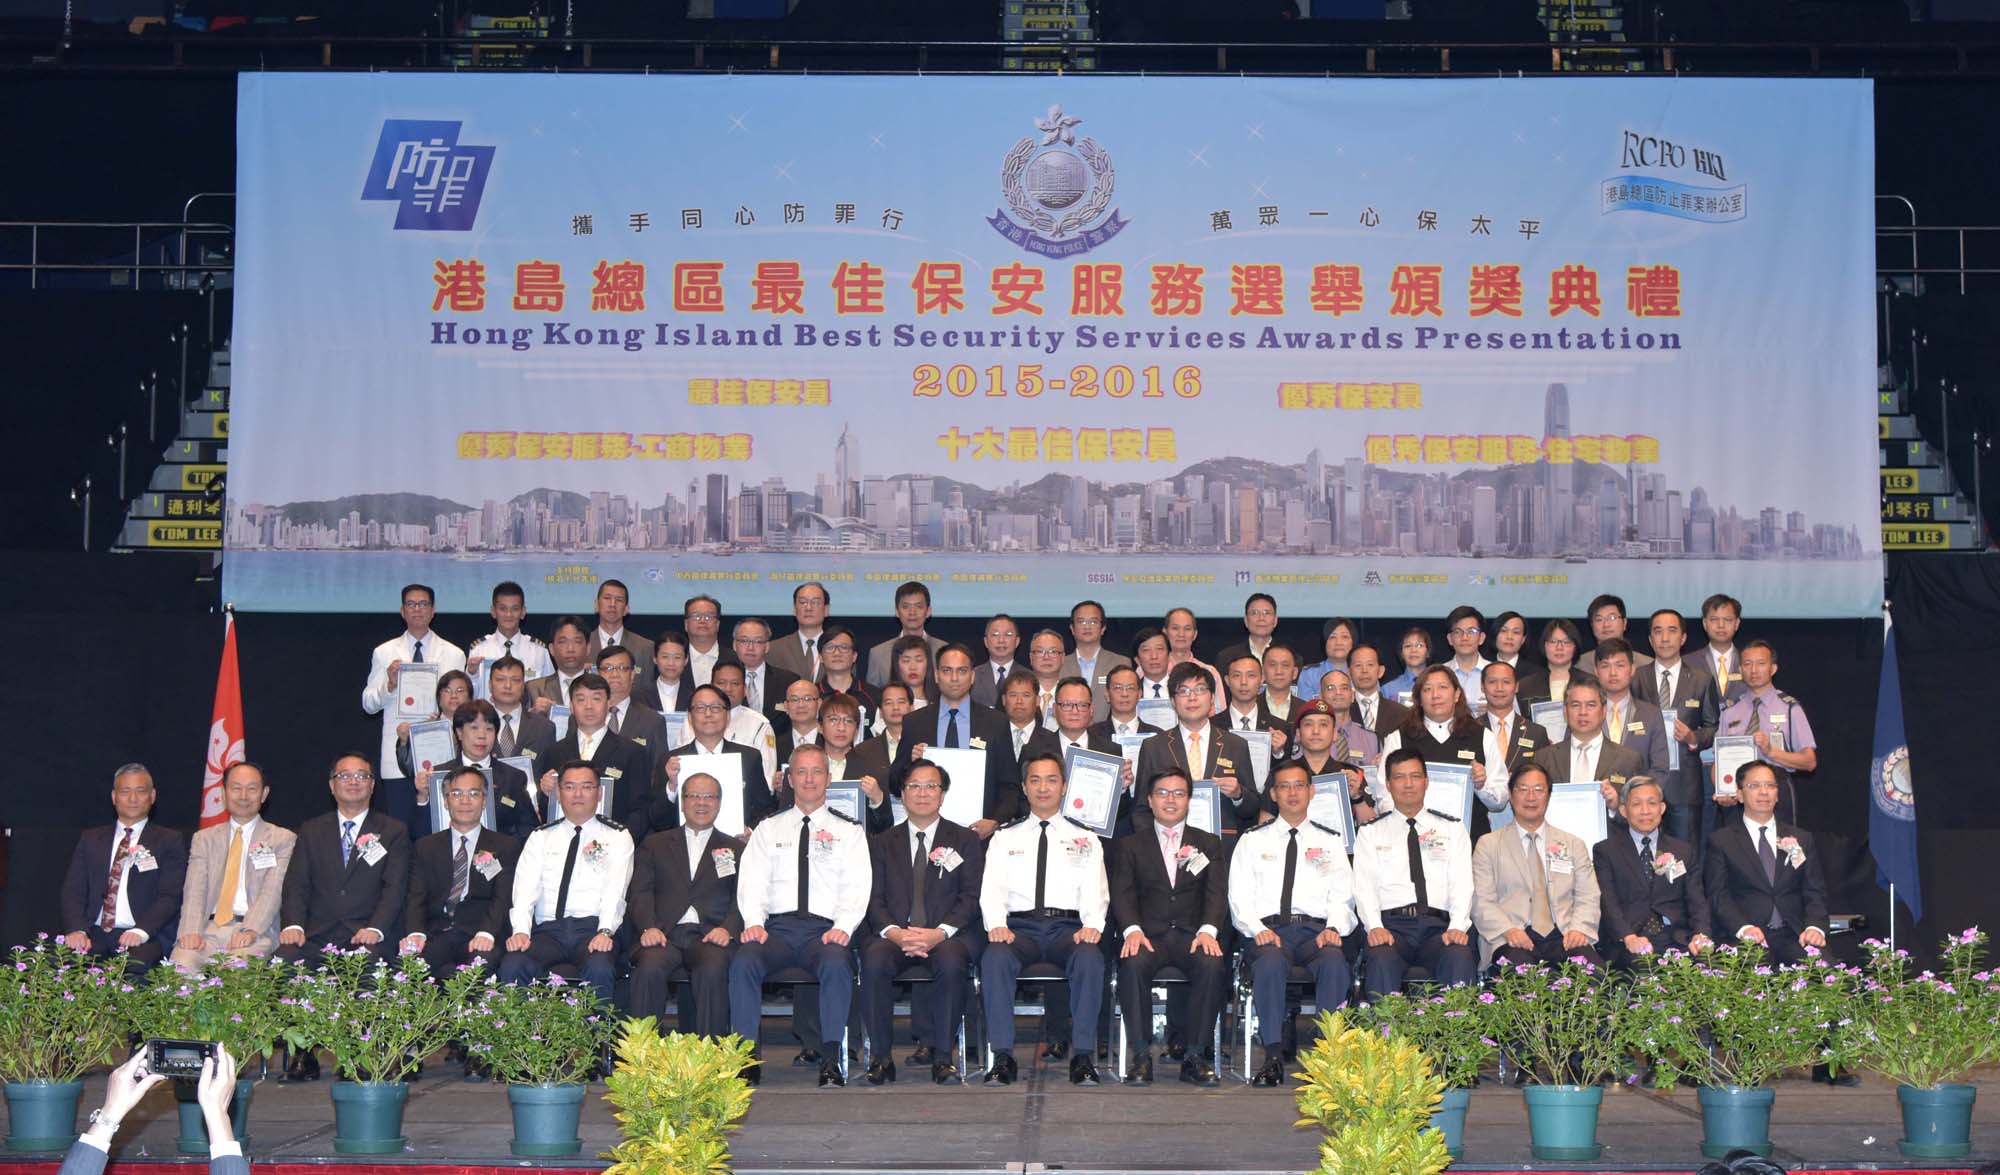 Hong Kong Island Region Best Security Services Awards 2015-2016